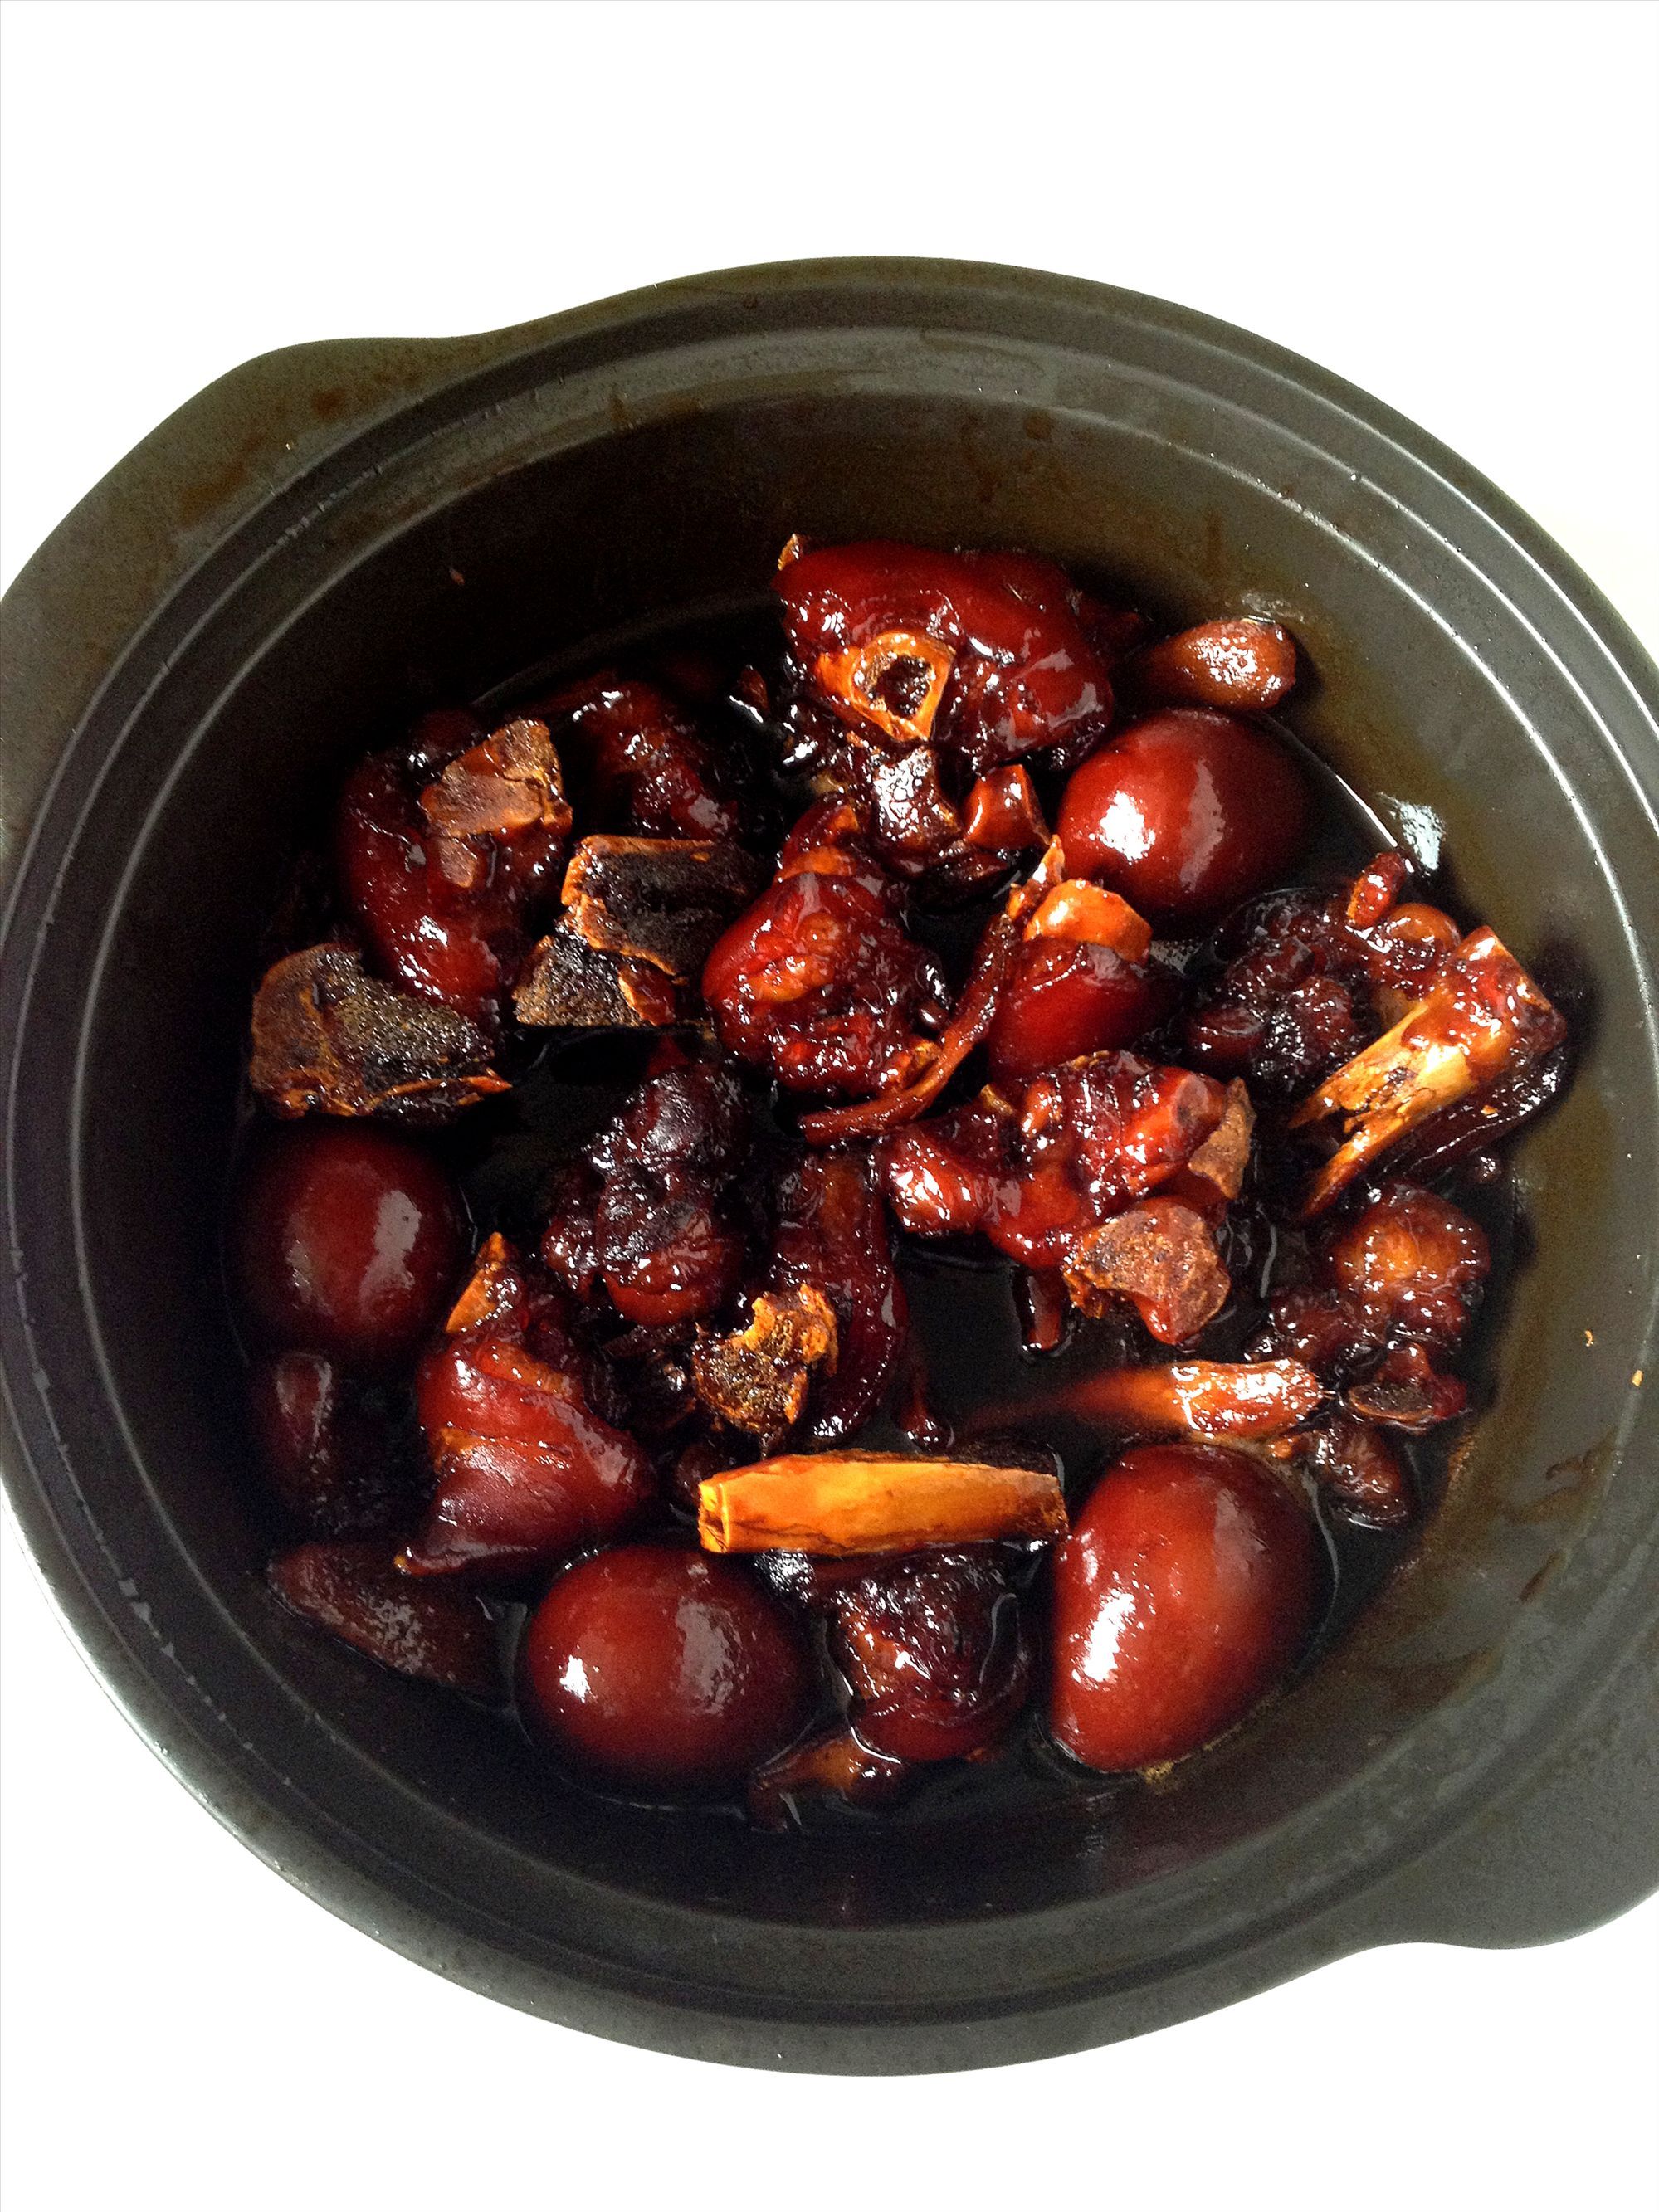 猪脚醋 Black Vinegar Pork Trotters - Nanyang Kitchen 南洋小厨